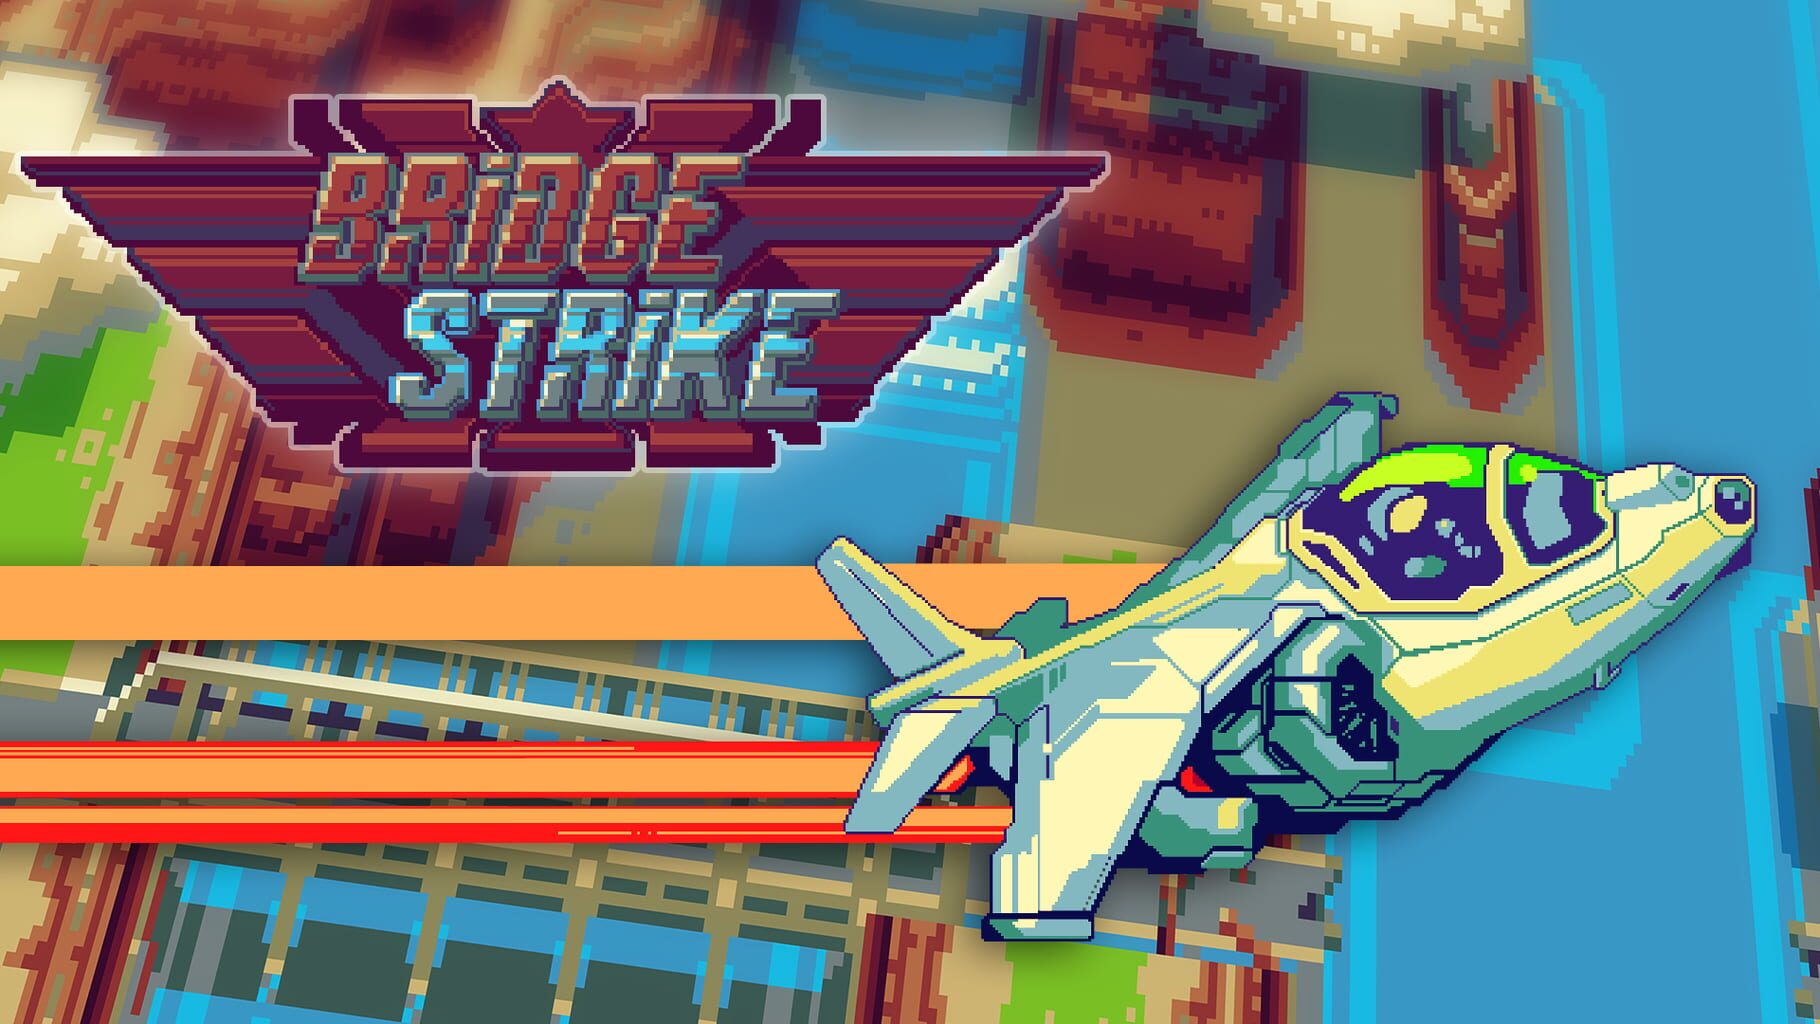 Bridge Strike artwork